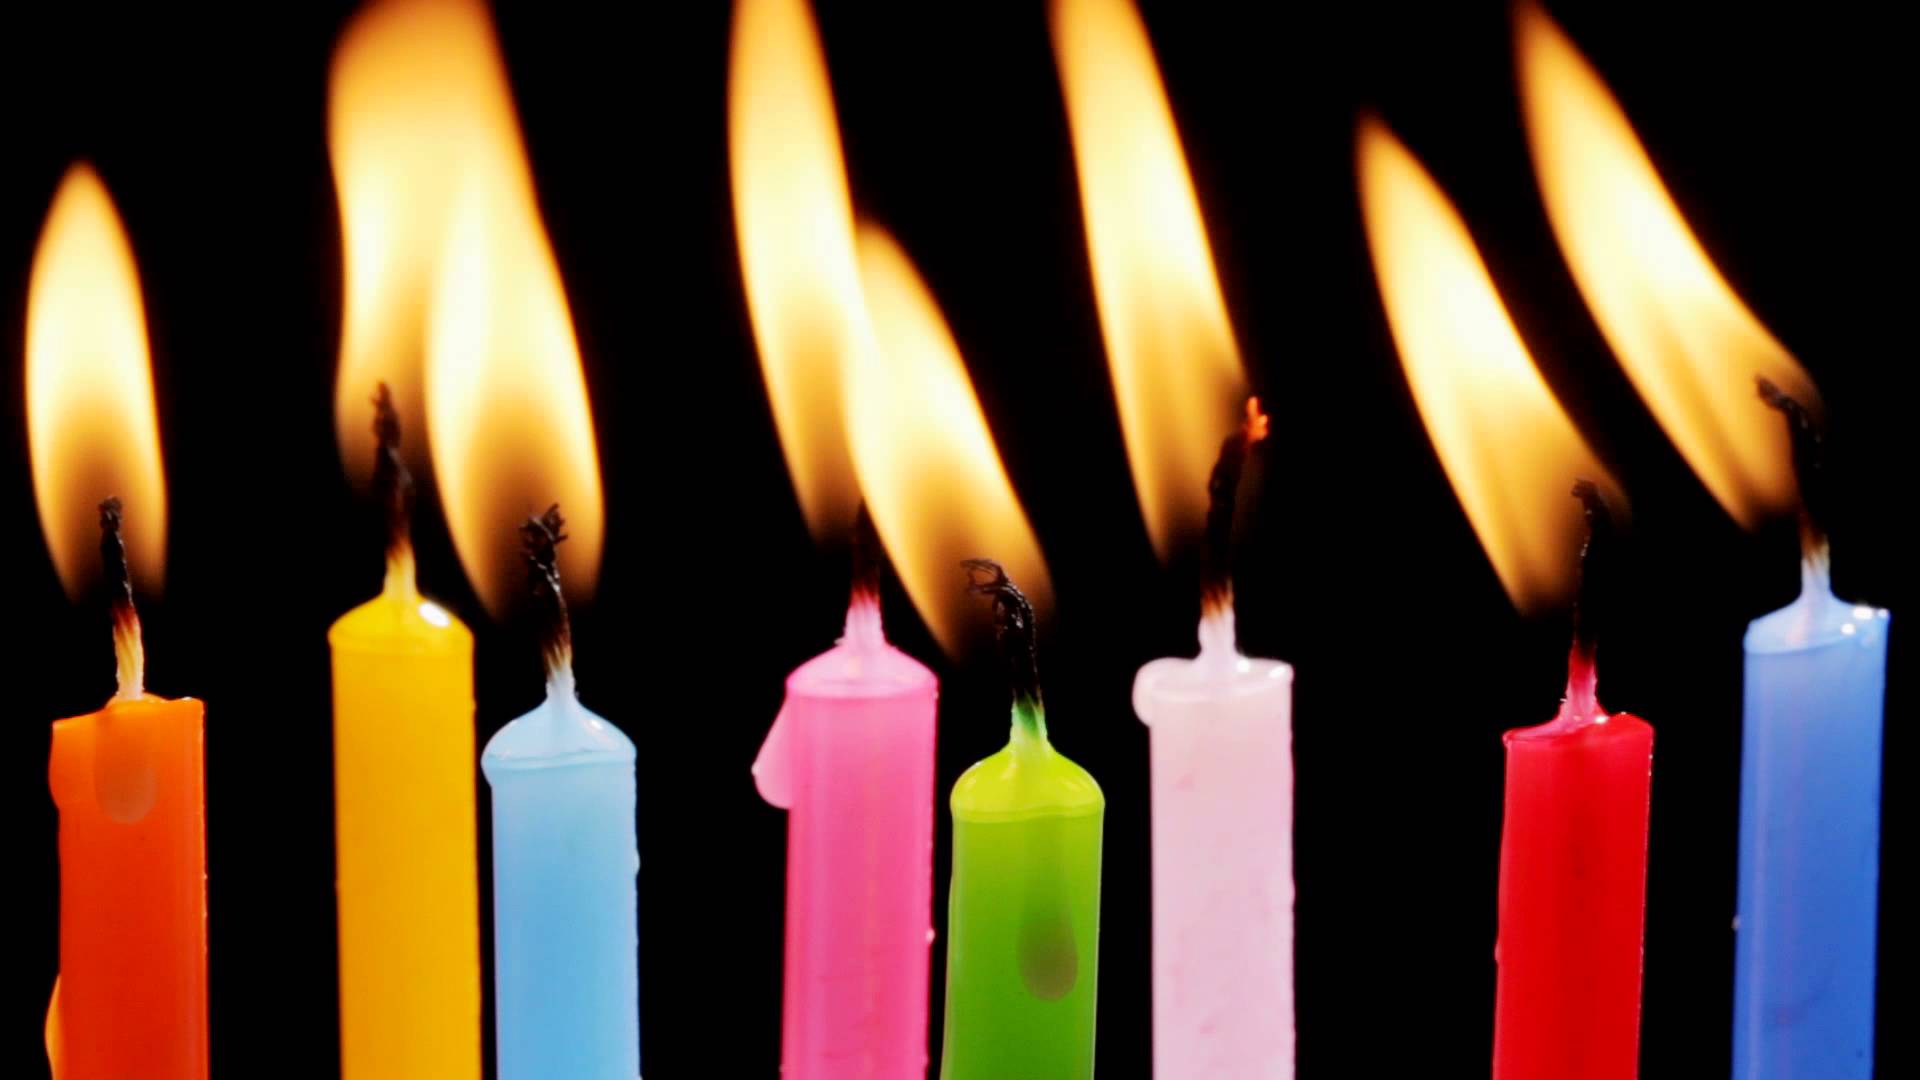 birthday candles 5 sec - YouTube